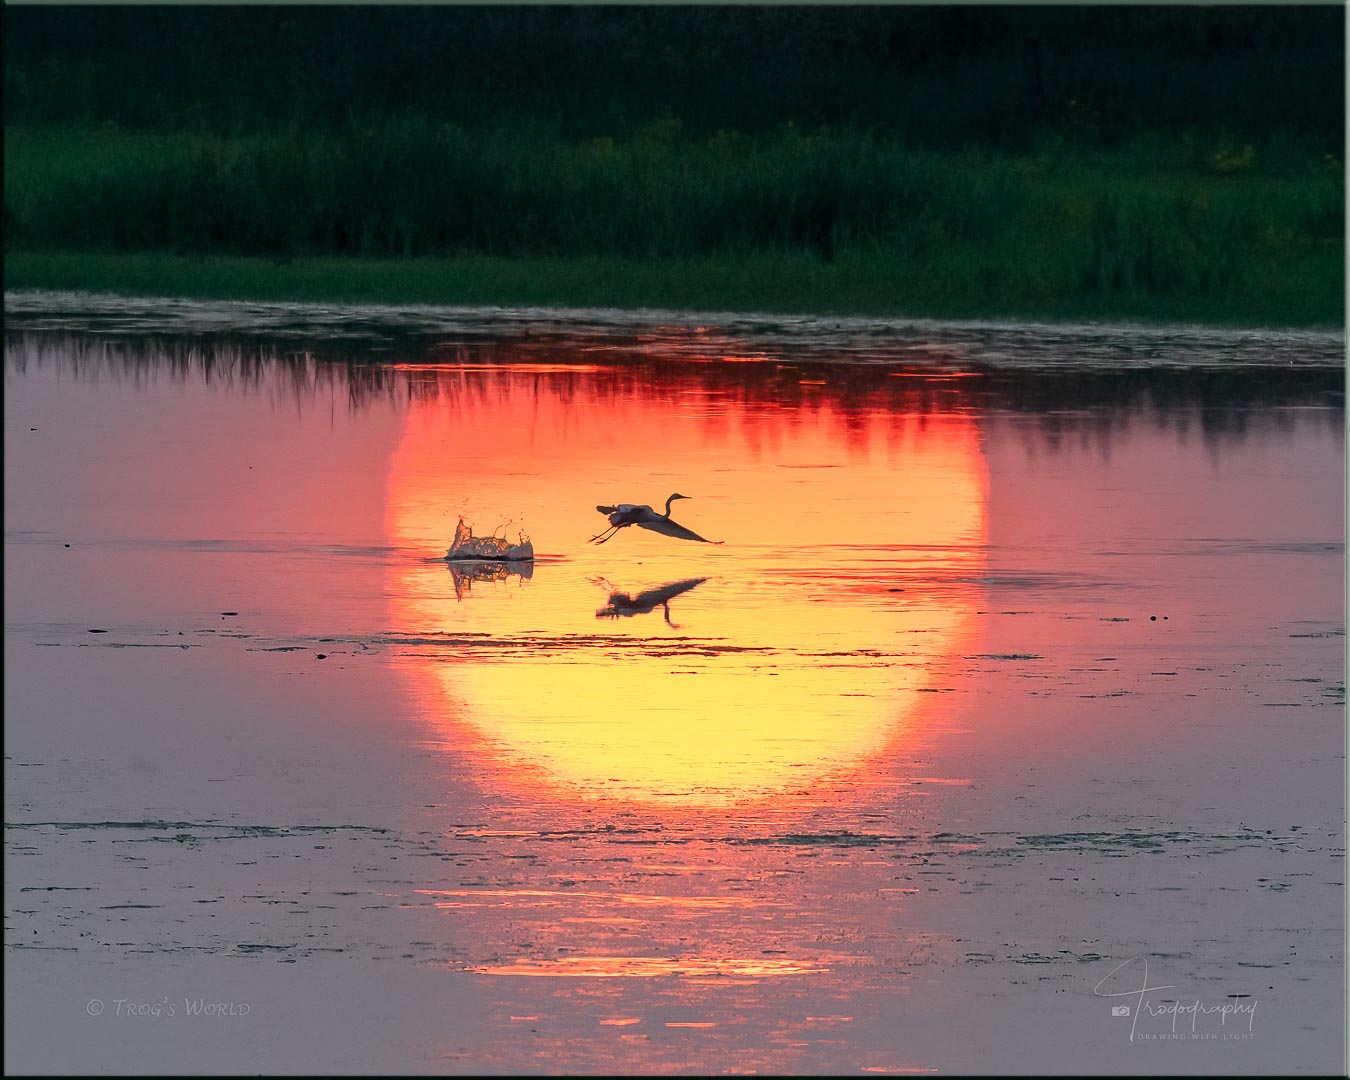 Great Egret in flight through sunset reflection